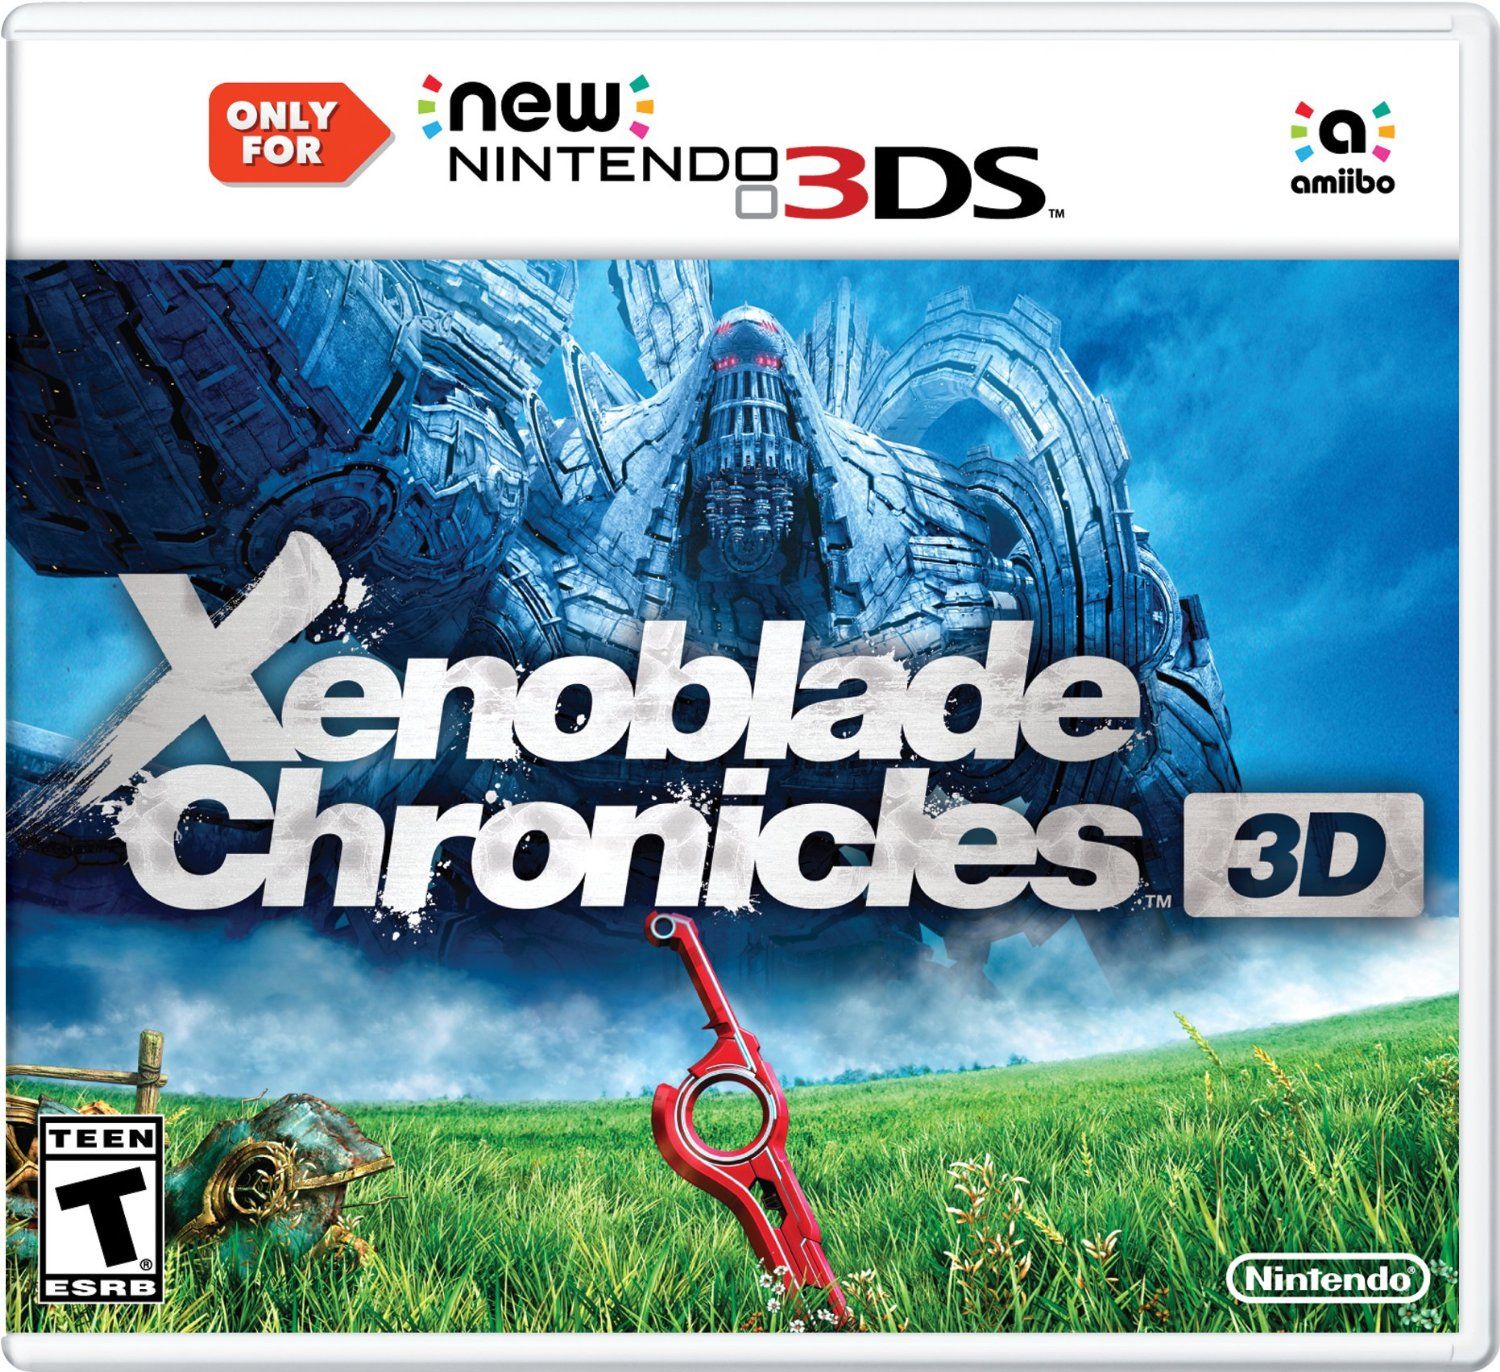 Xenoblade Chronocles 3D boxart